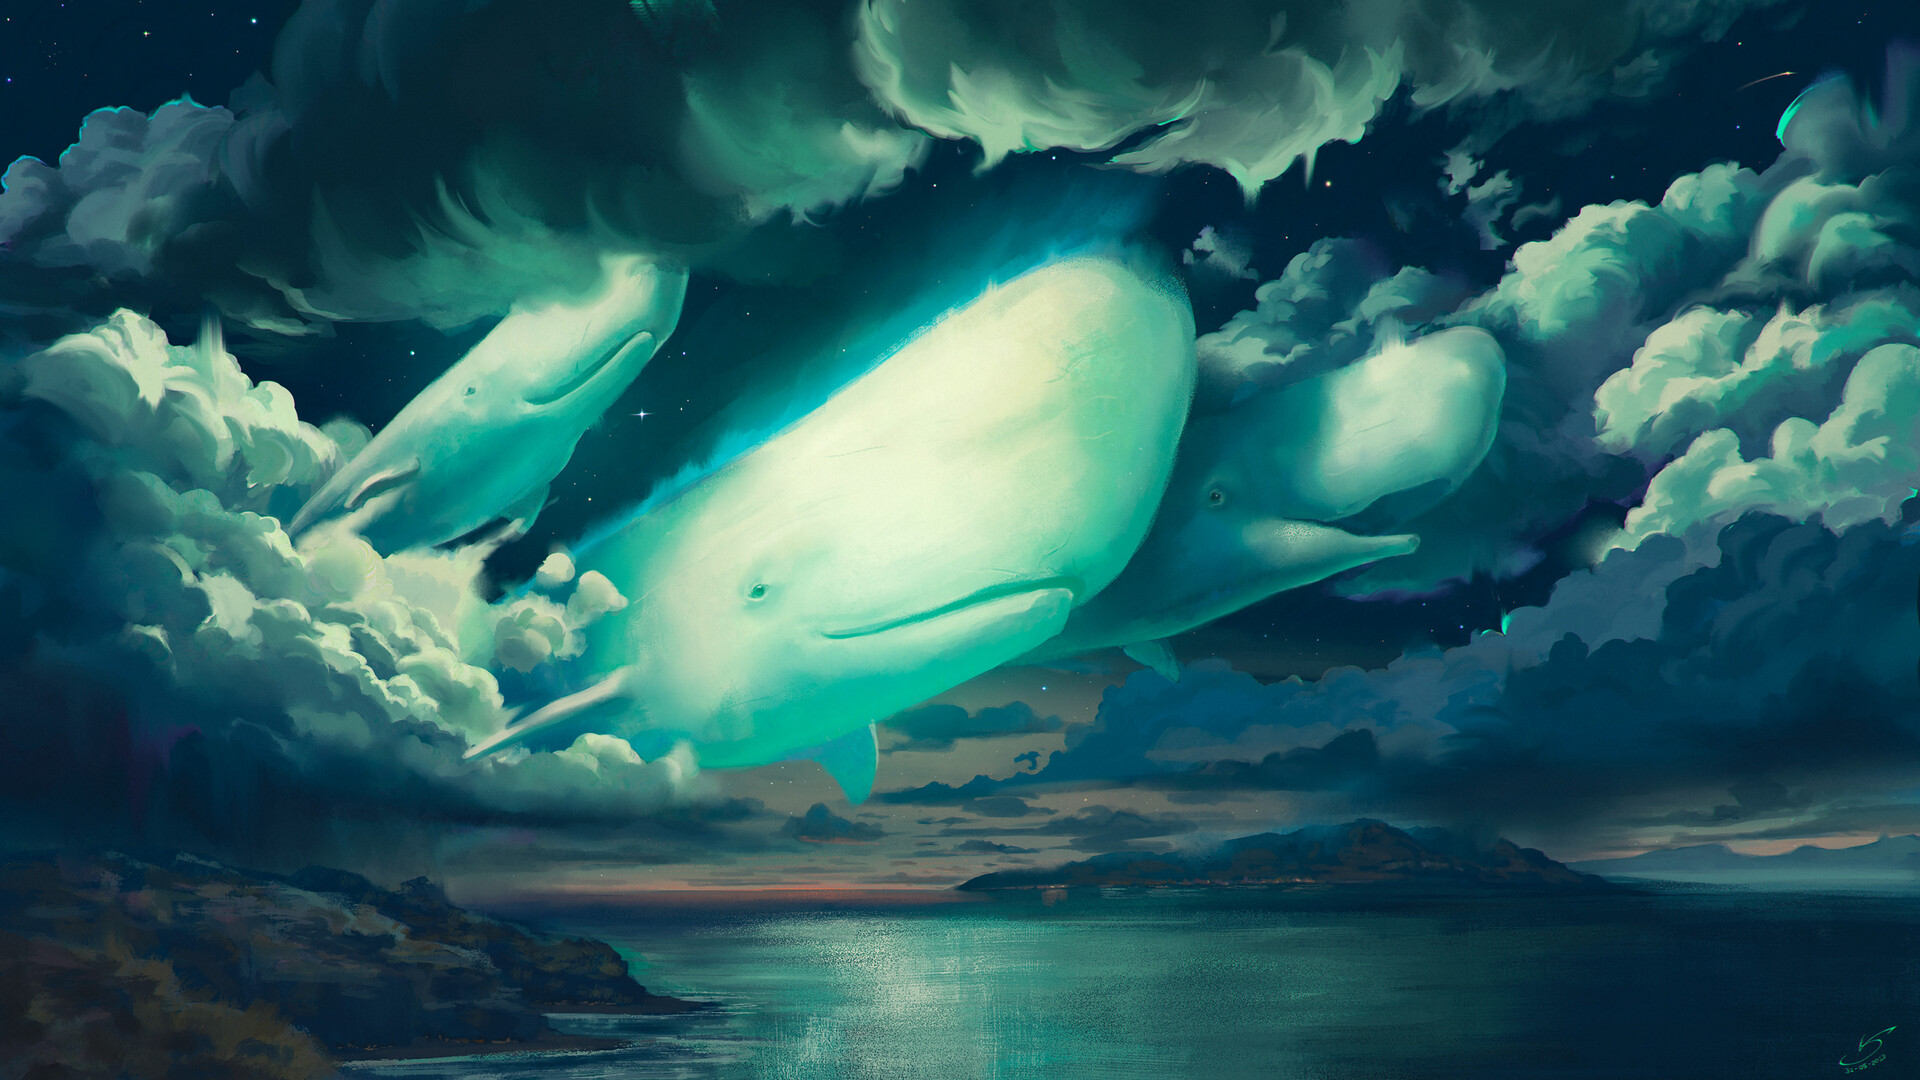 Victor Sales Digital Art Fantasy Art ArtStation Whale Clouds Sky Night Sky Starry Night Animals Wate 1920x1080